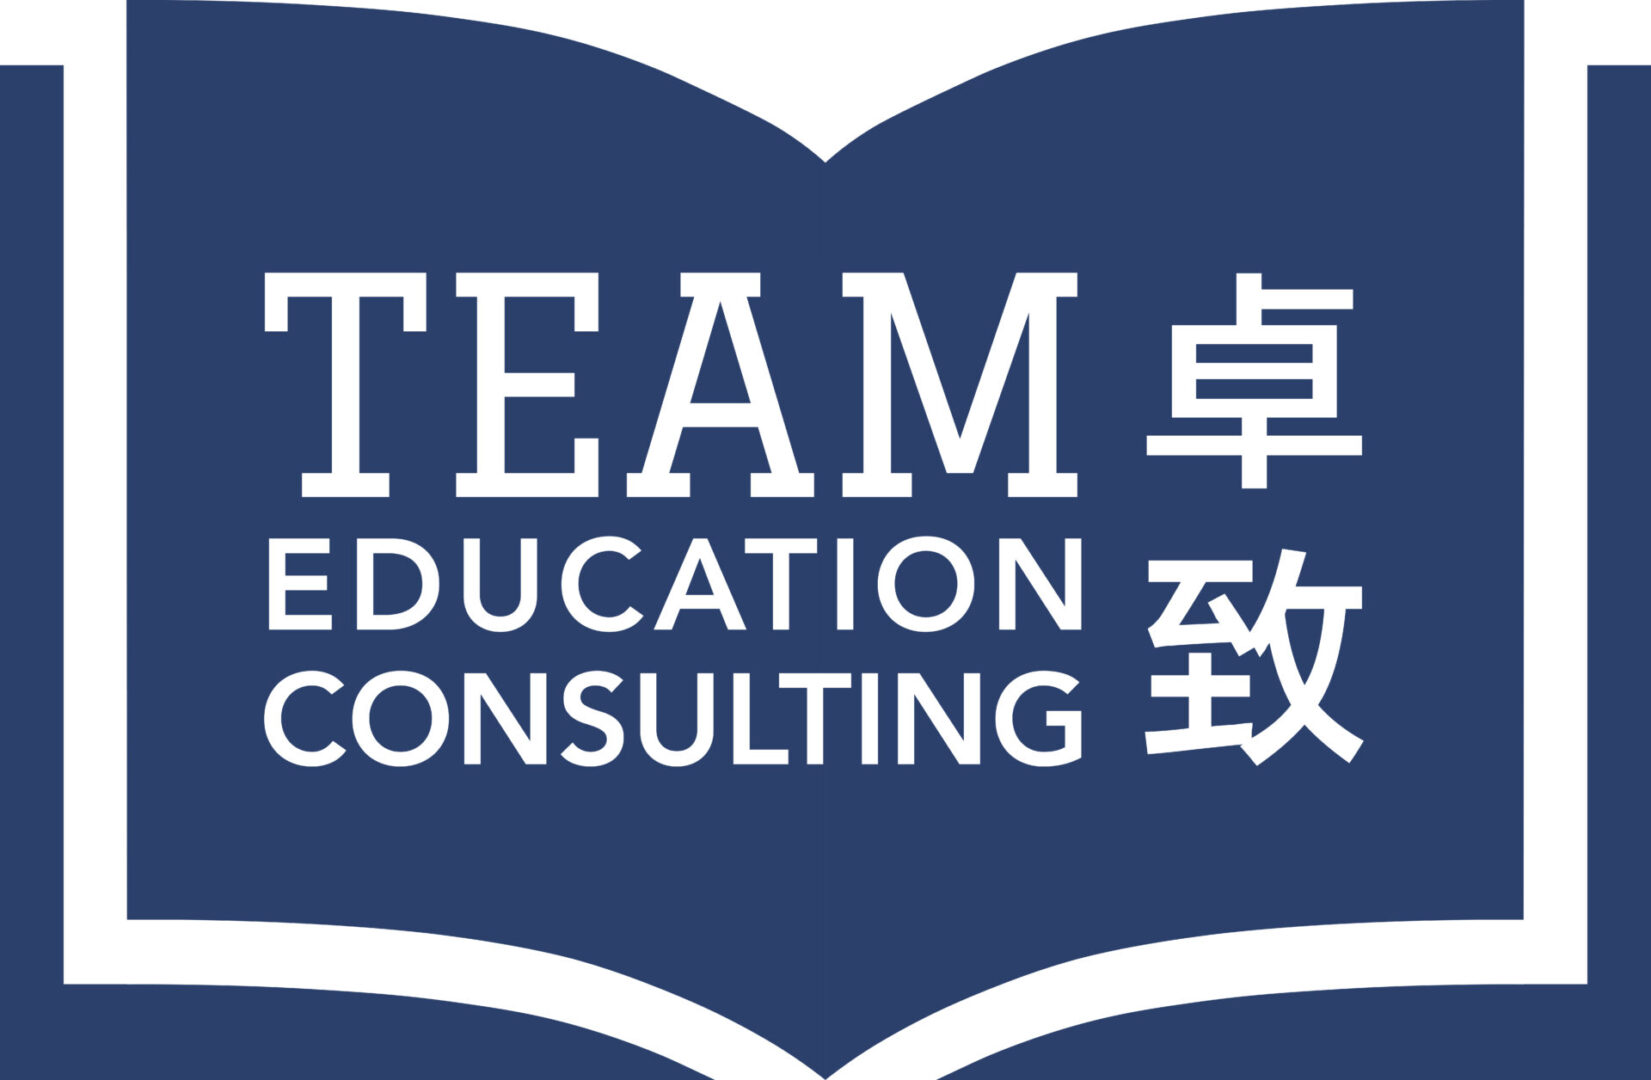 Team Education Consulting